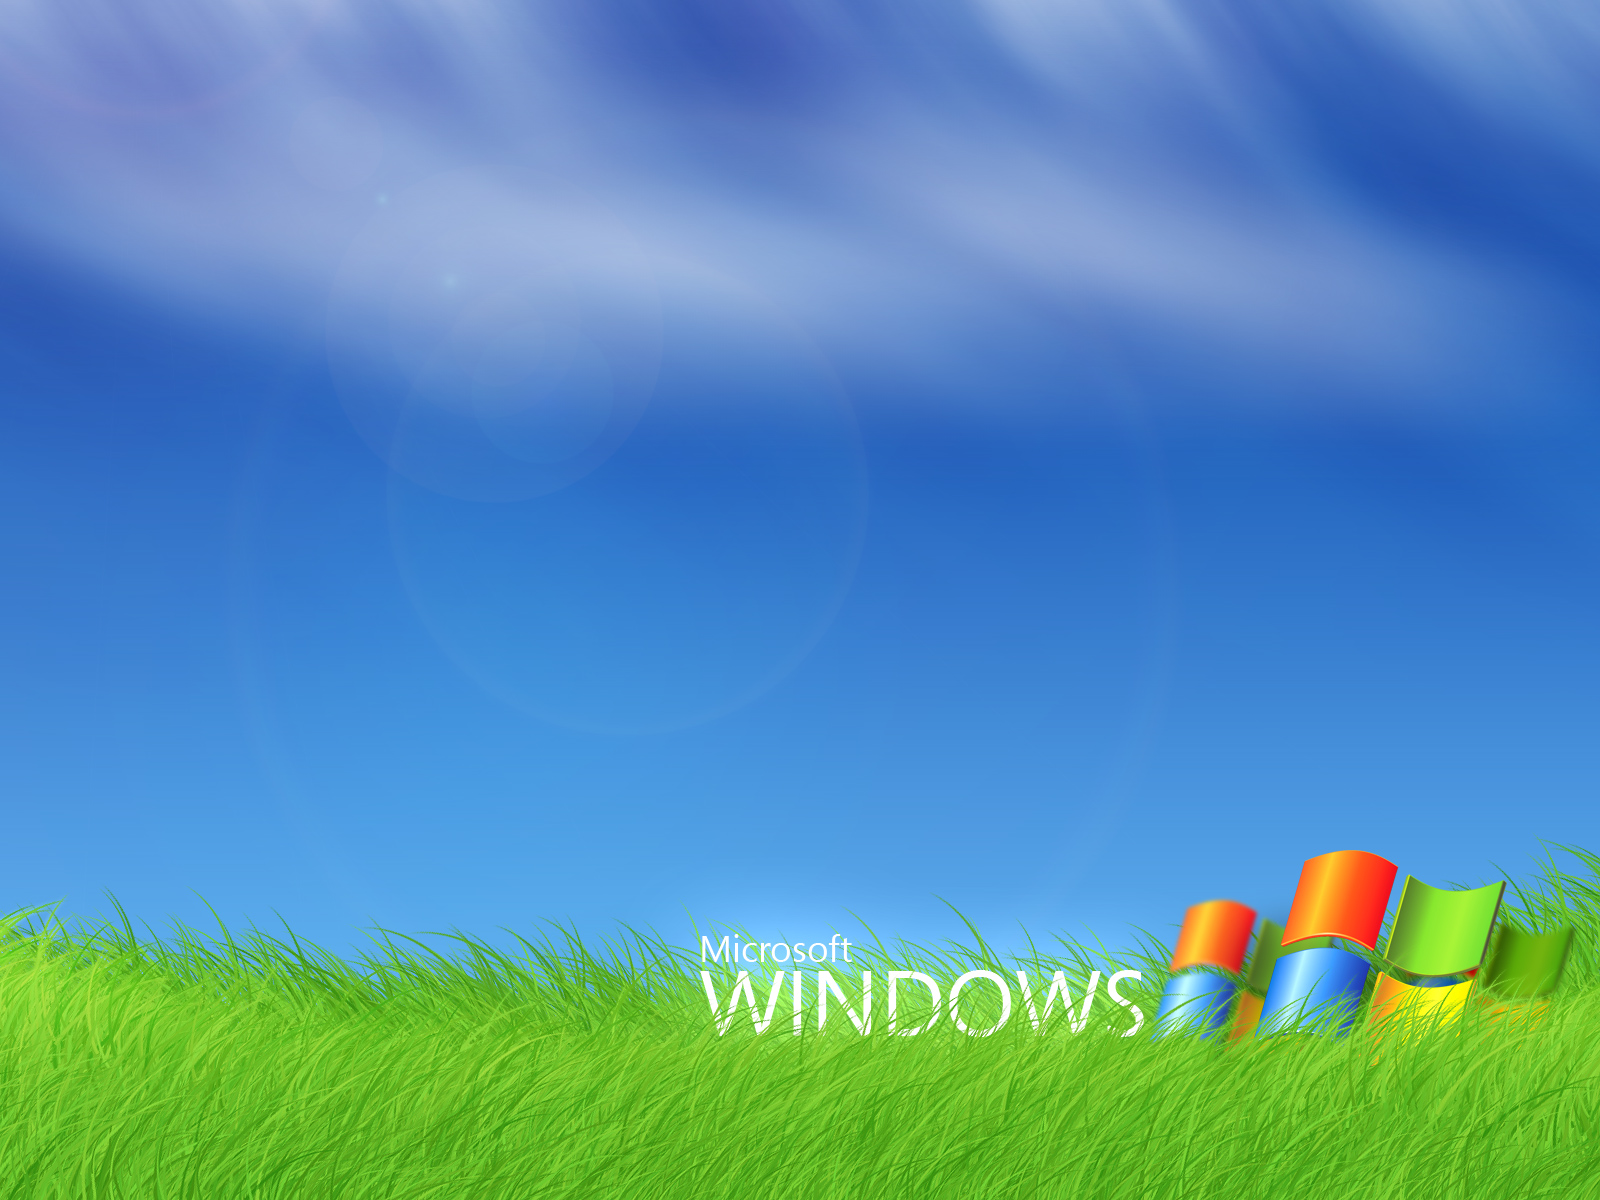 Windows XP wallpapers cool windows wallpaper hd Wallpapereorg 1600x1200